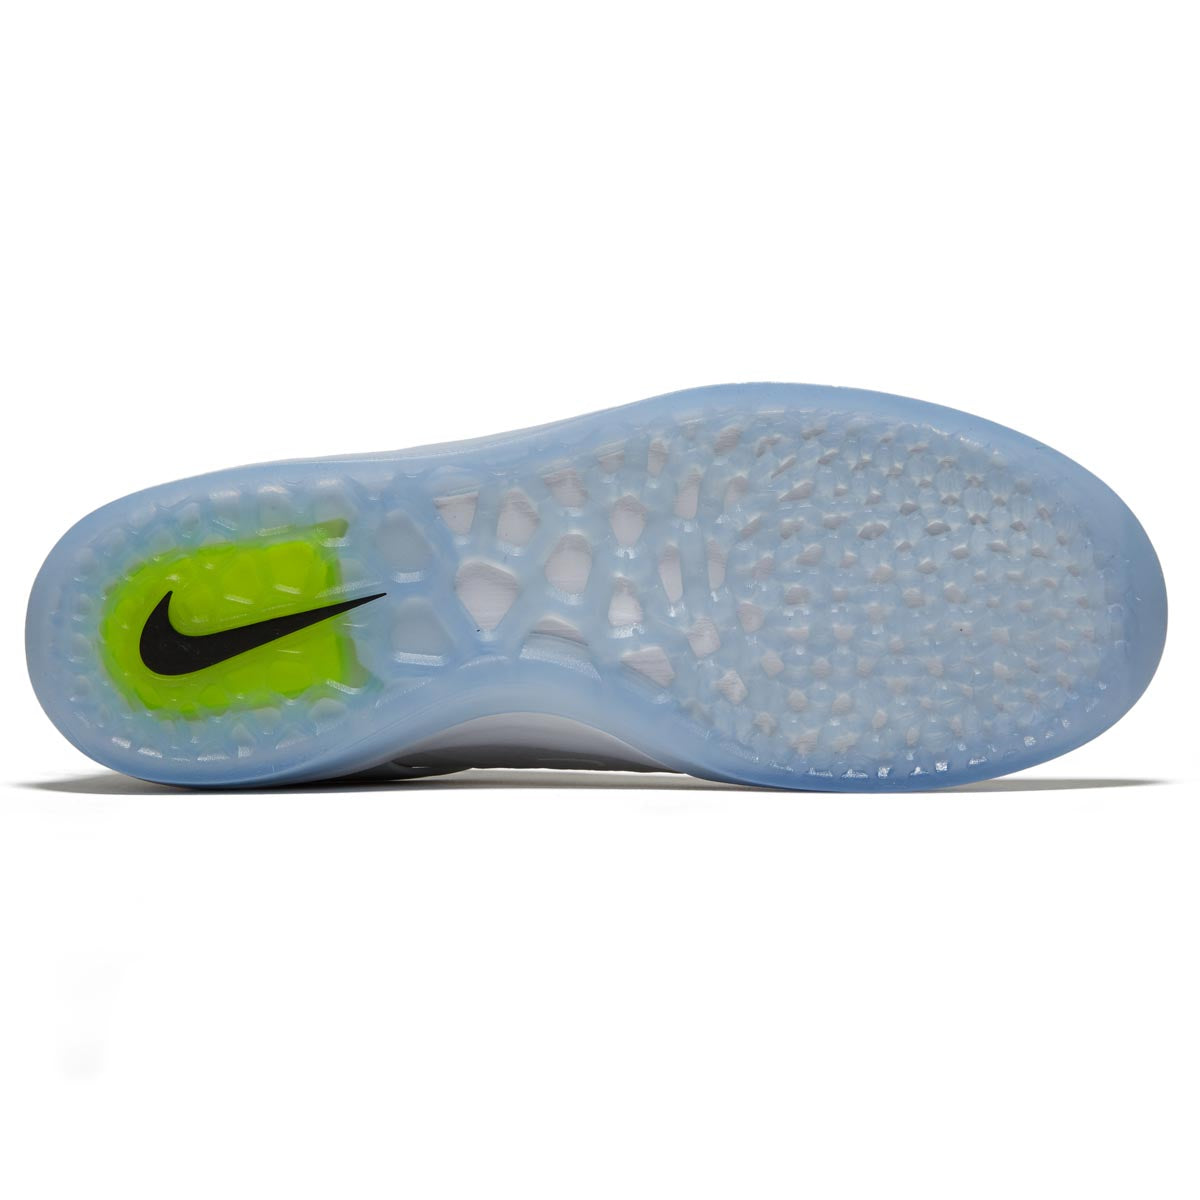 Nike SB Zoom Nyjah 3 Shoes - Pure Platinum/White/Pure Platinum/Volt image 4